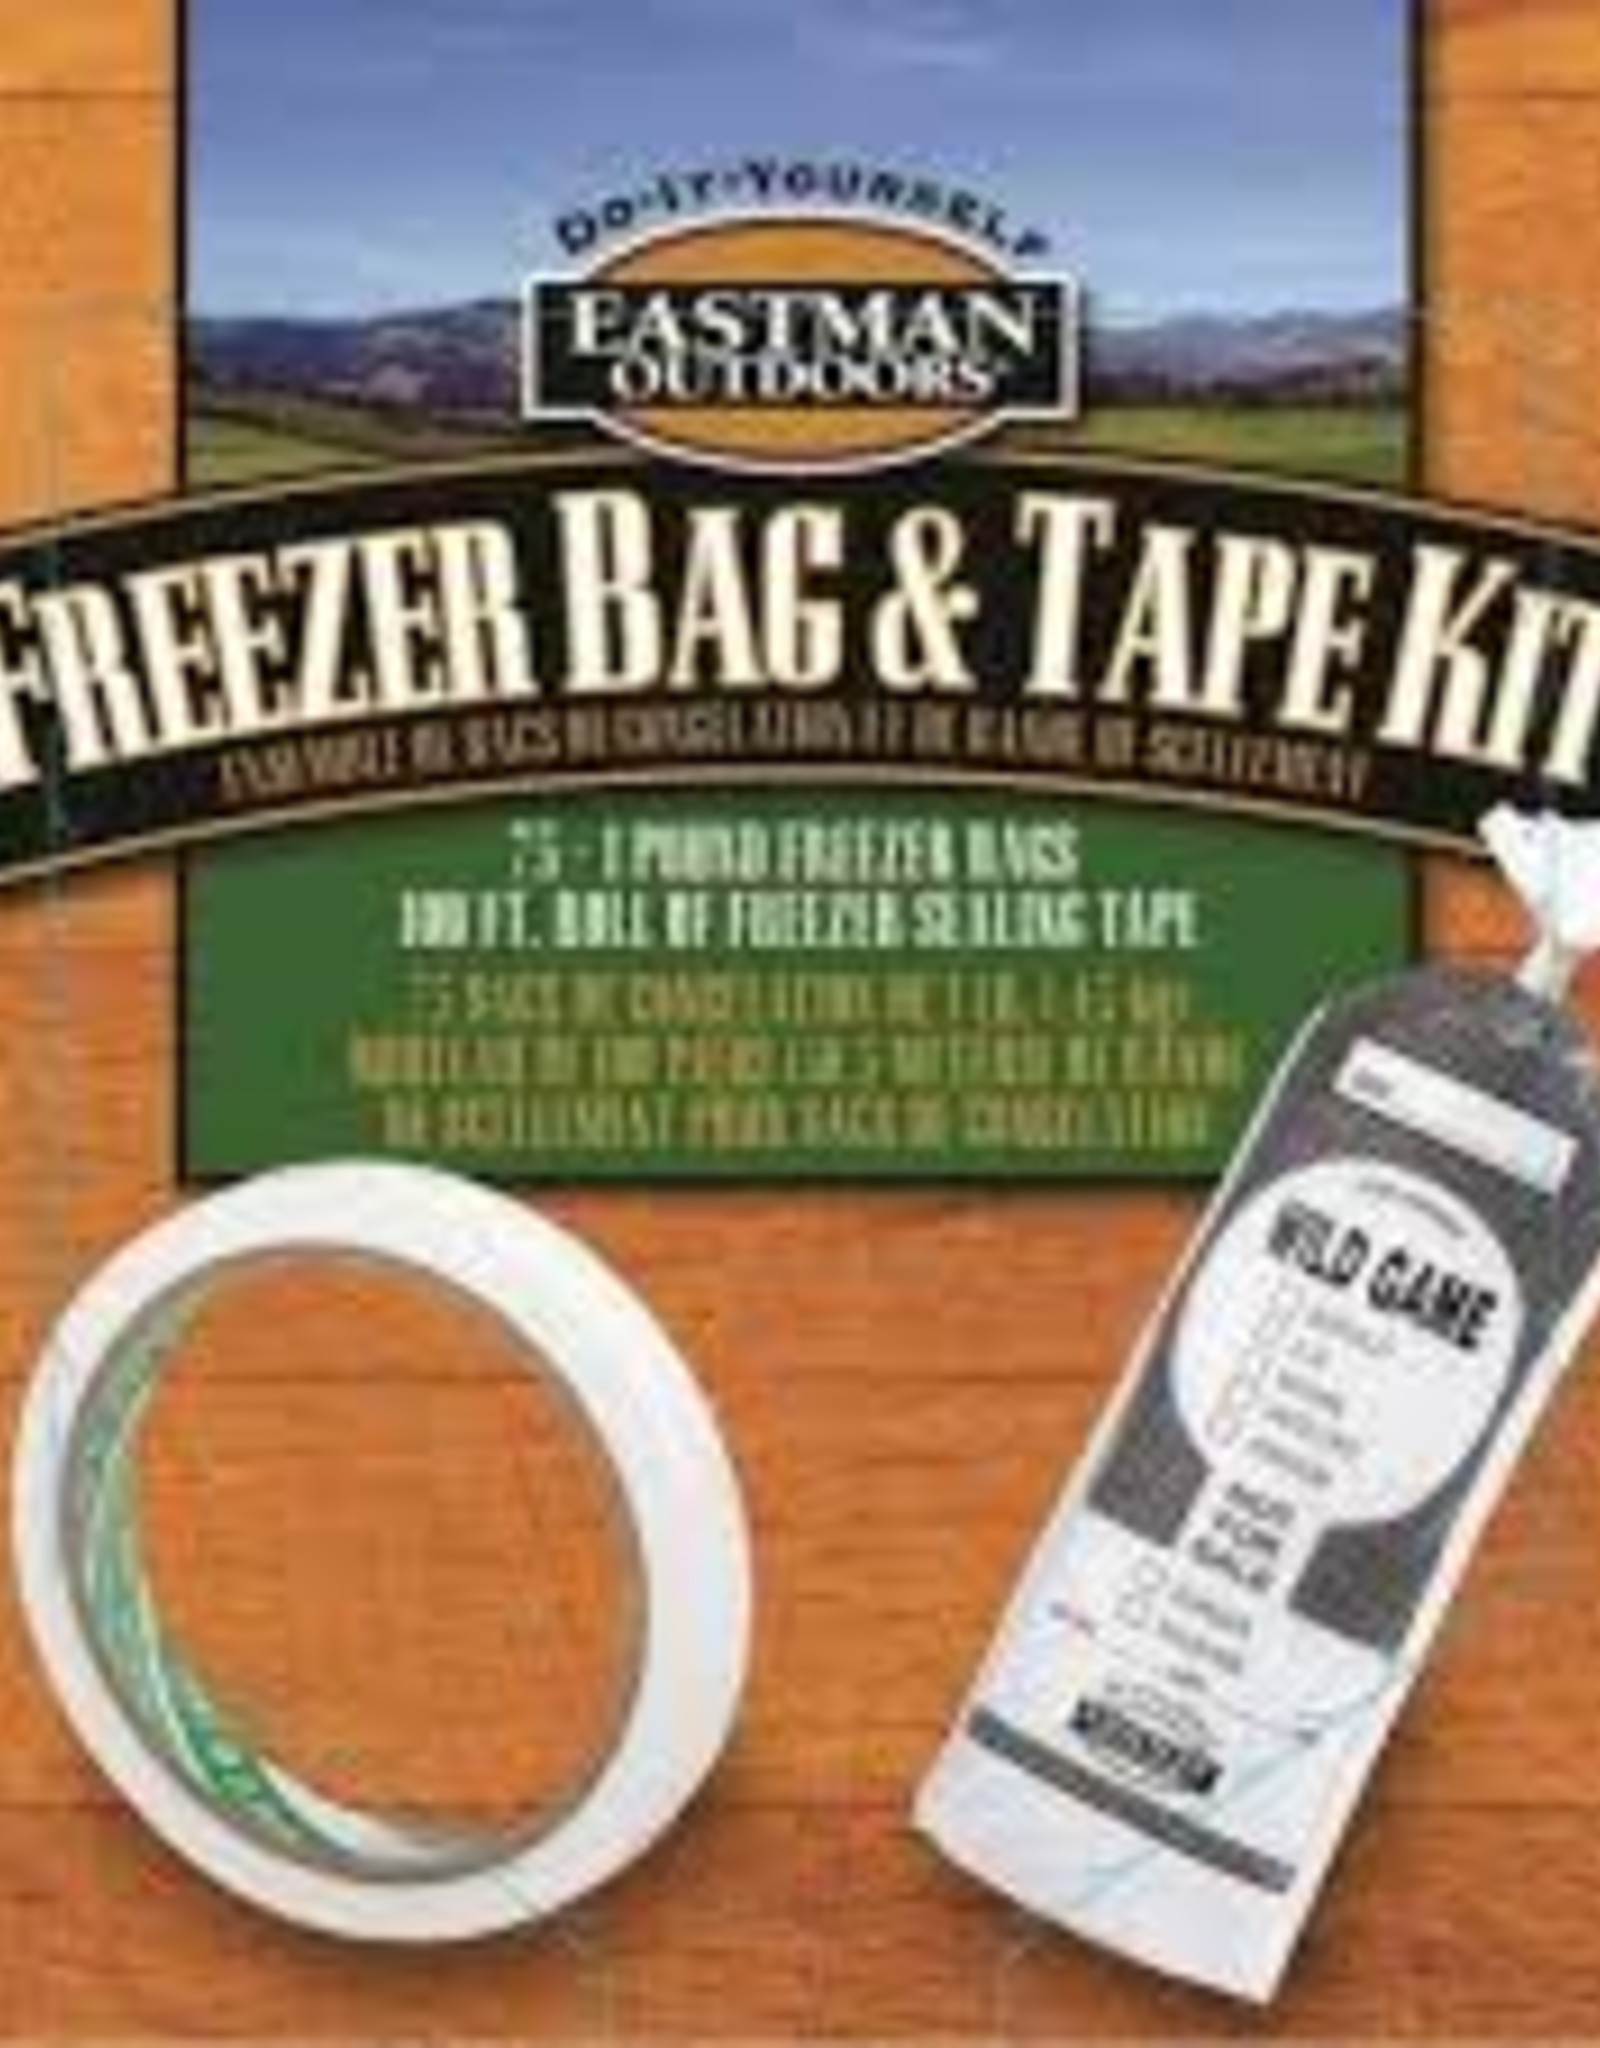 Eastman Outdoors Freezer Bag & Tape Kit